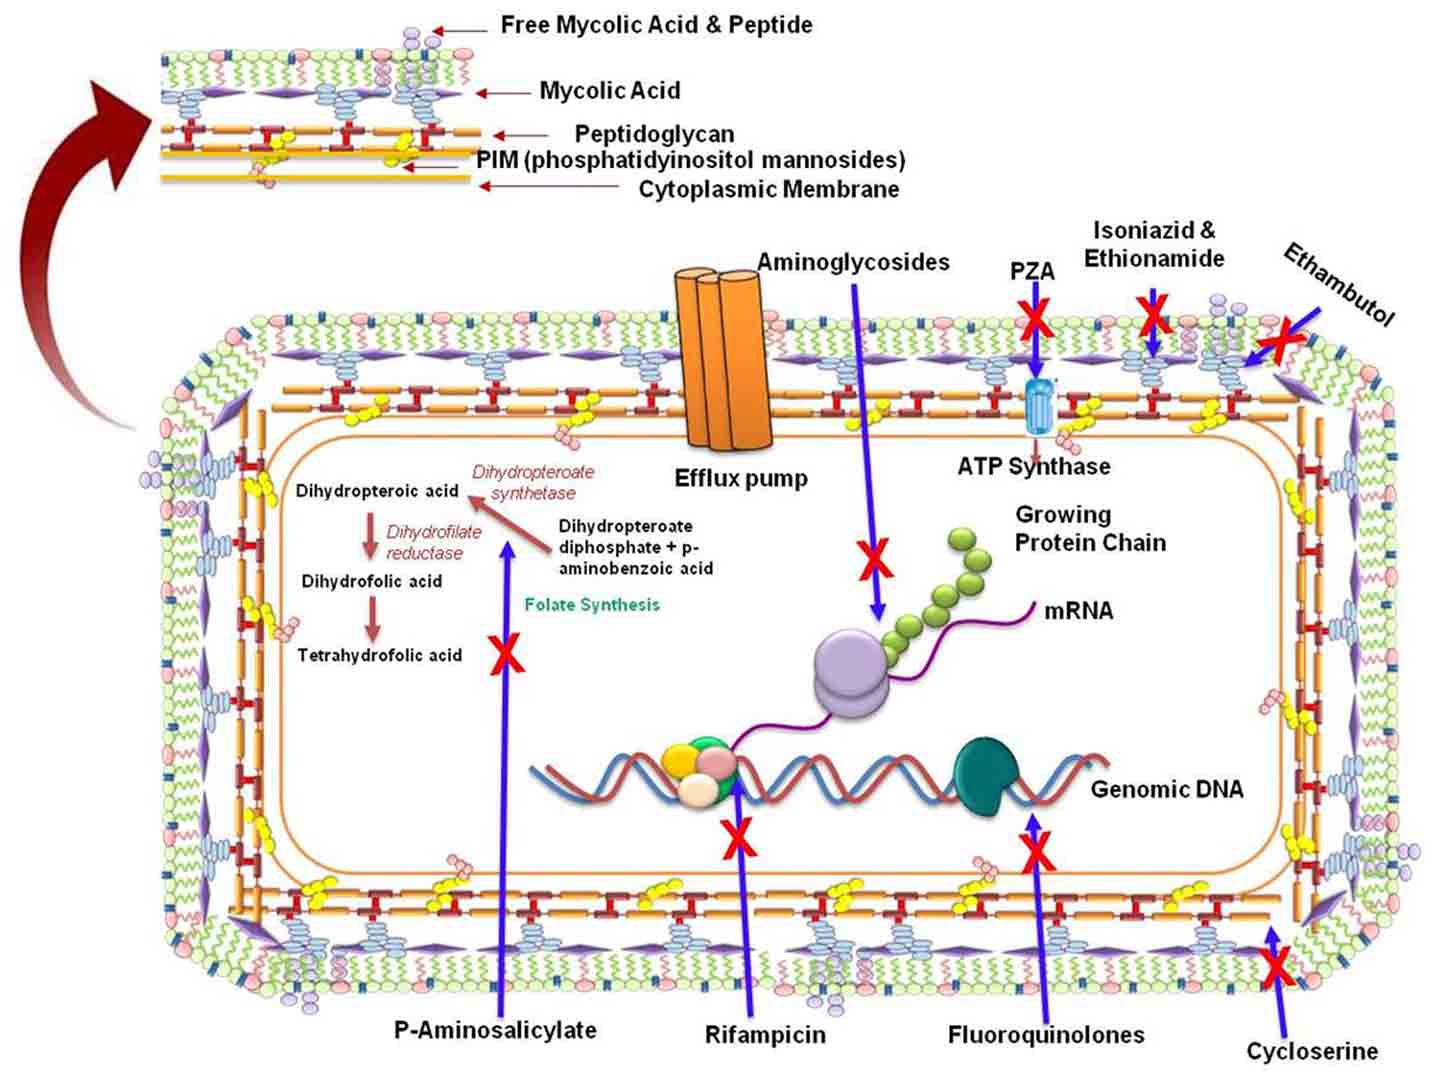 Elucidation drug resistance mechanisms of M. tuberculosis